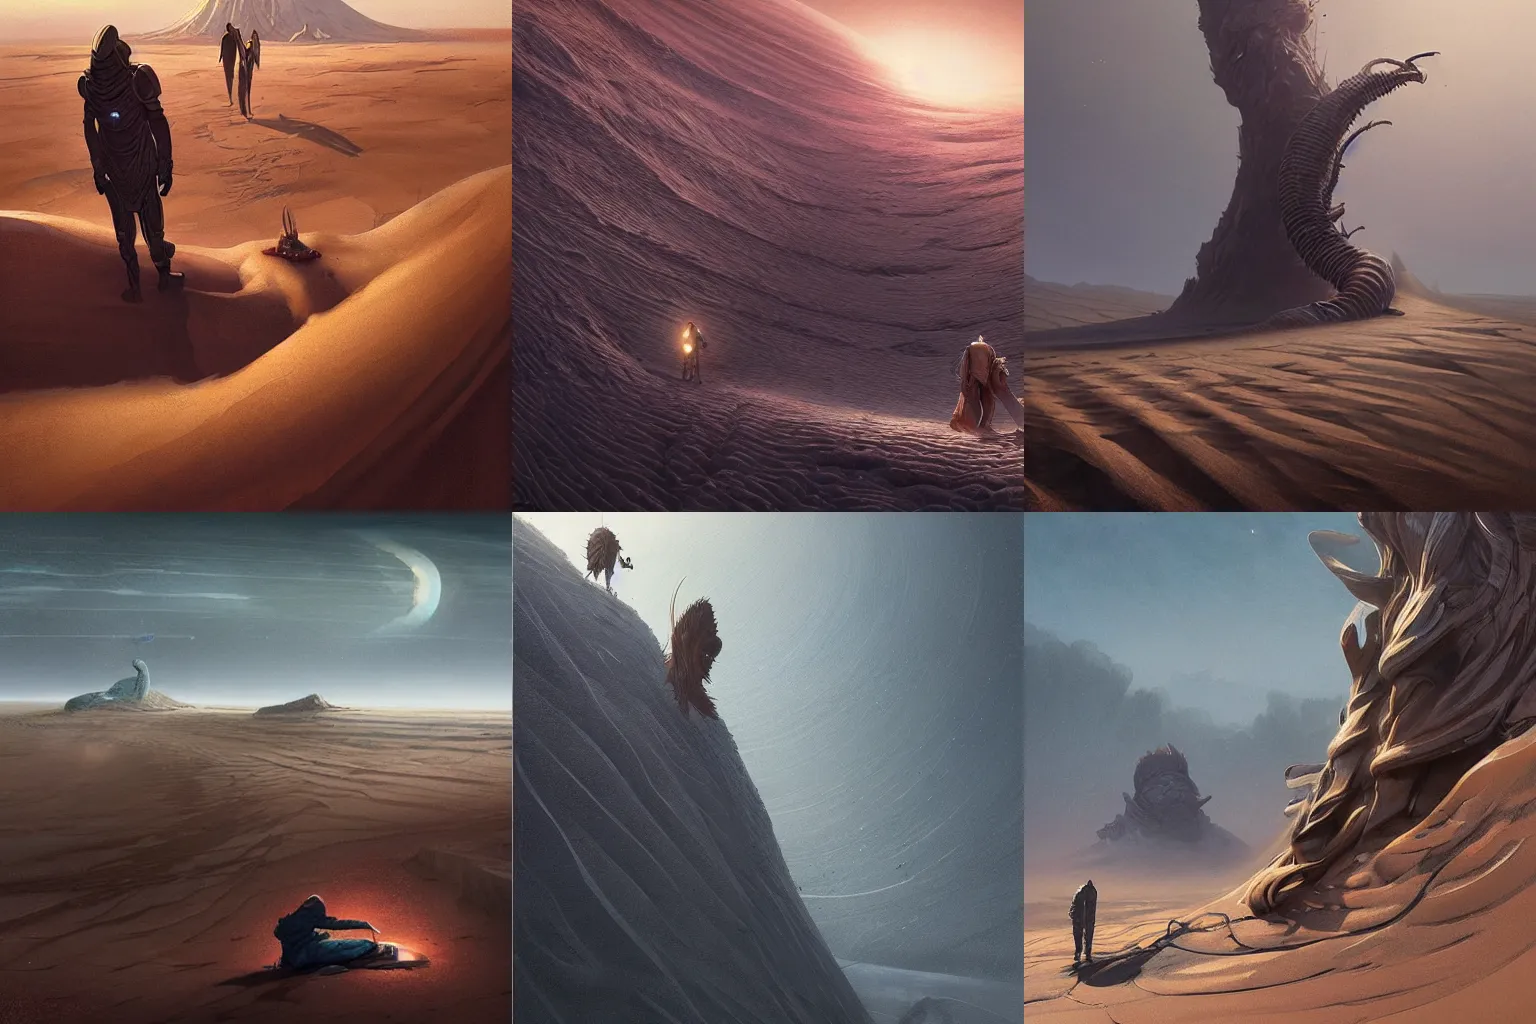 Prompt: huge worm eating a man, dune planet, highly detailed, sharp, 4k, award winning art by greg rutkowski